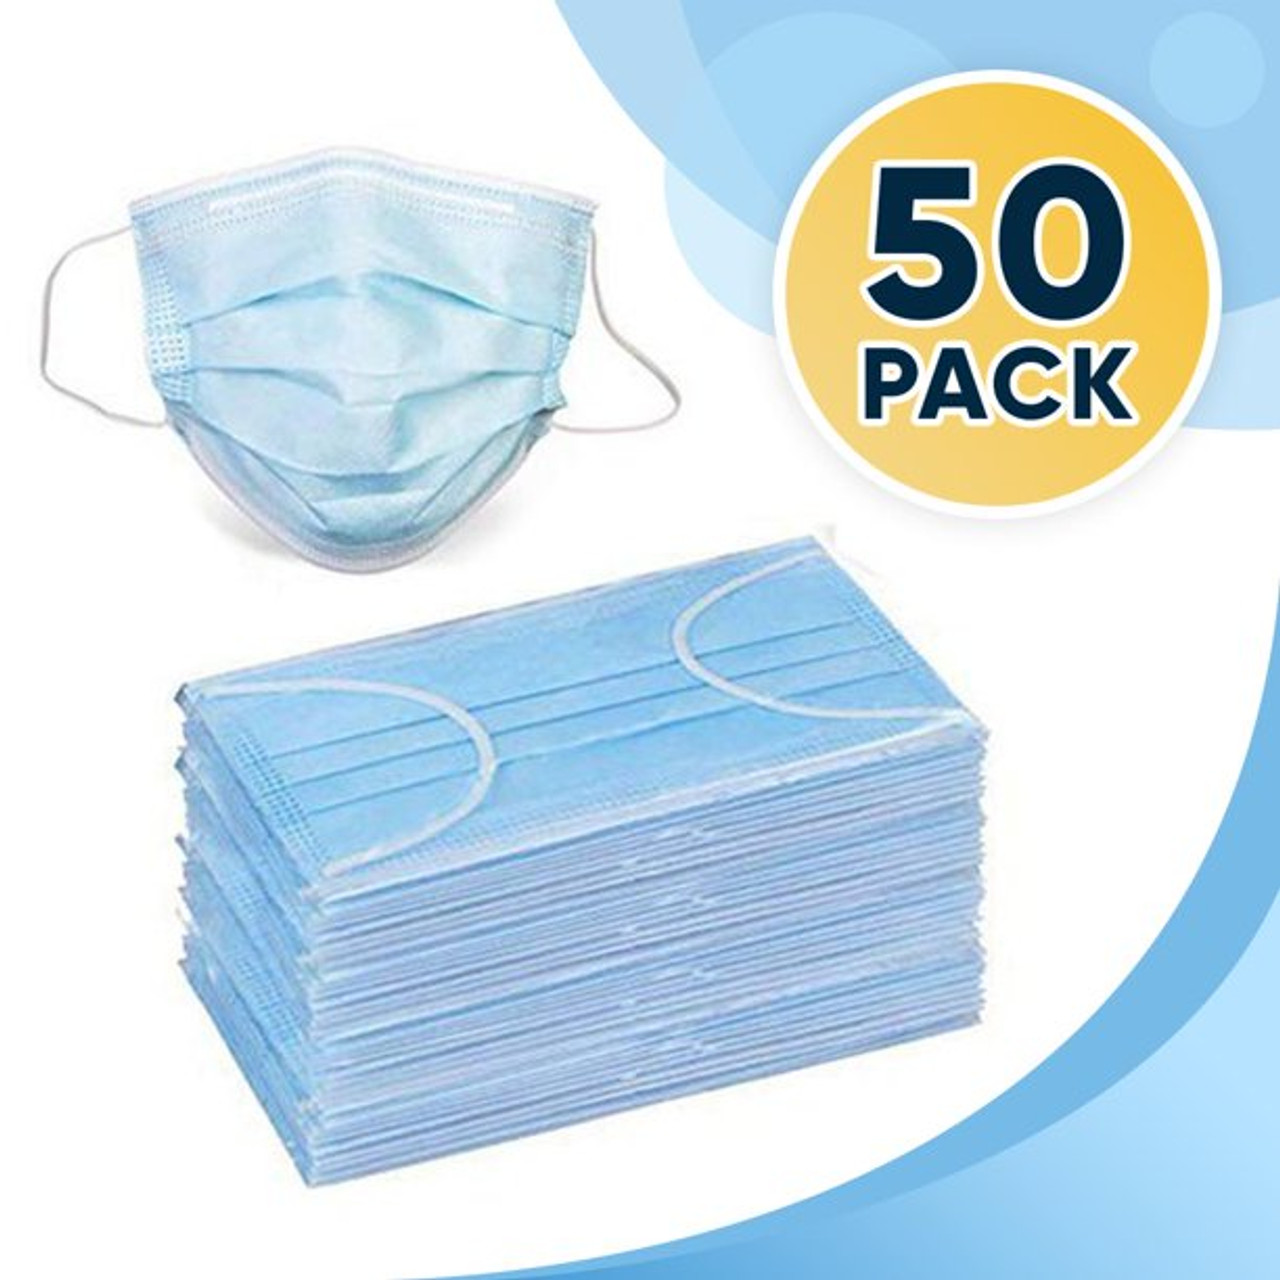 50 Pack Disposable face masks